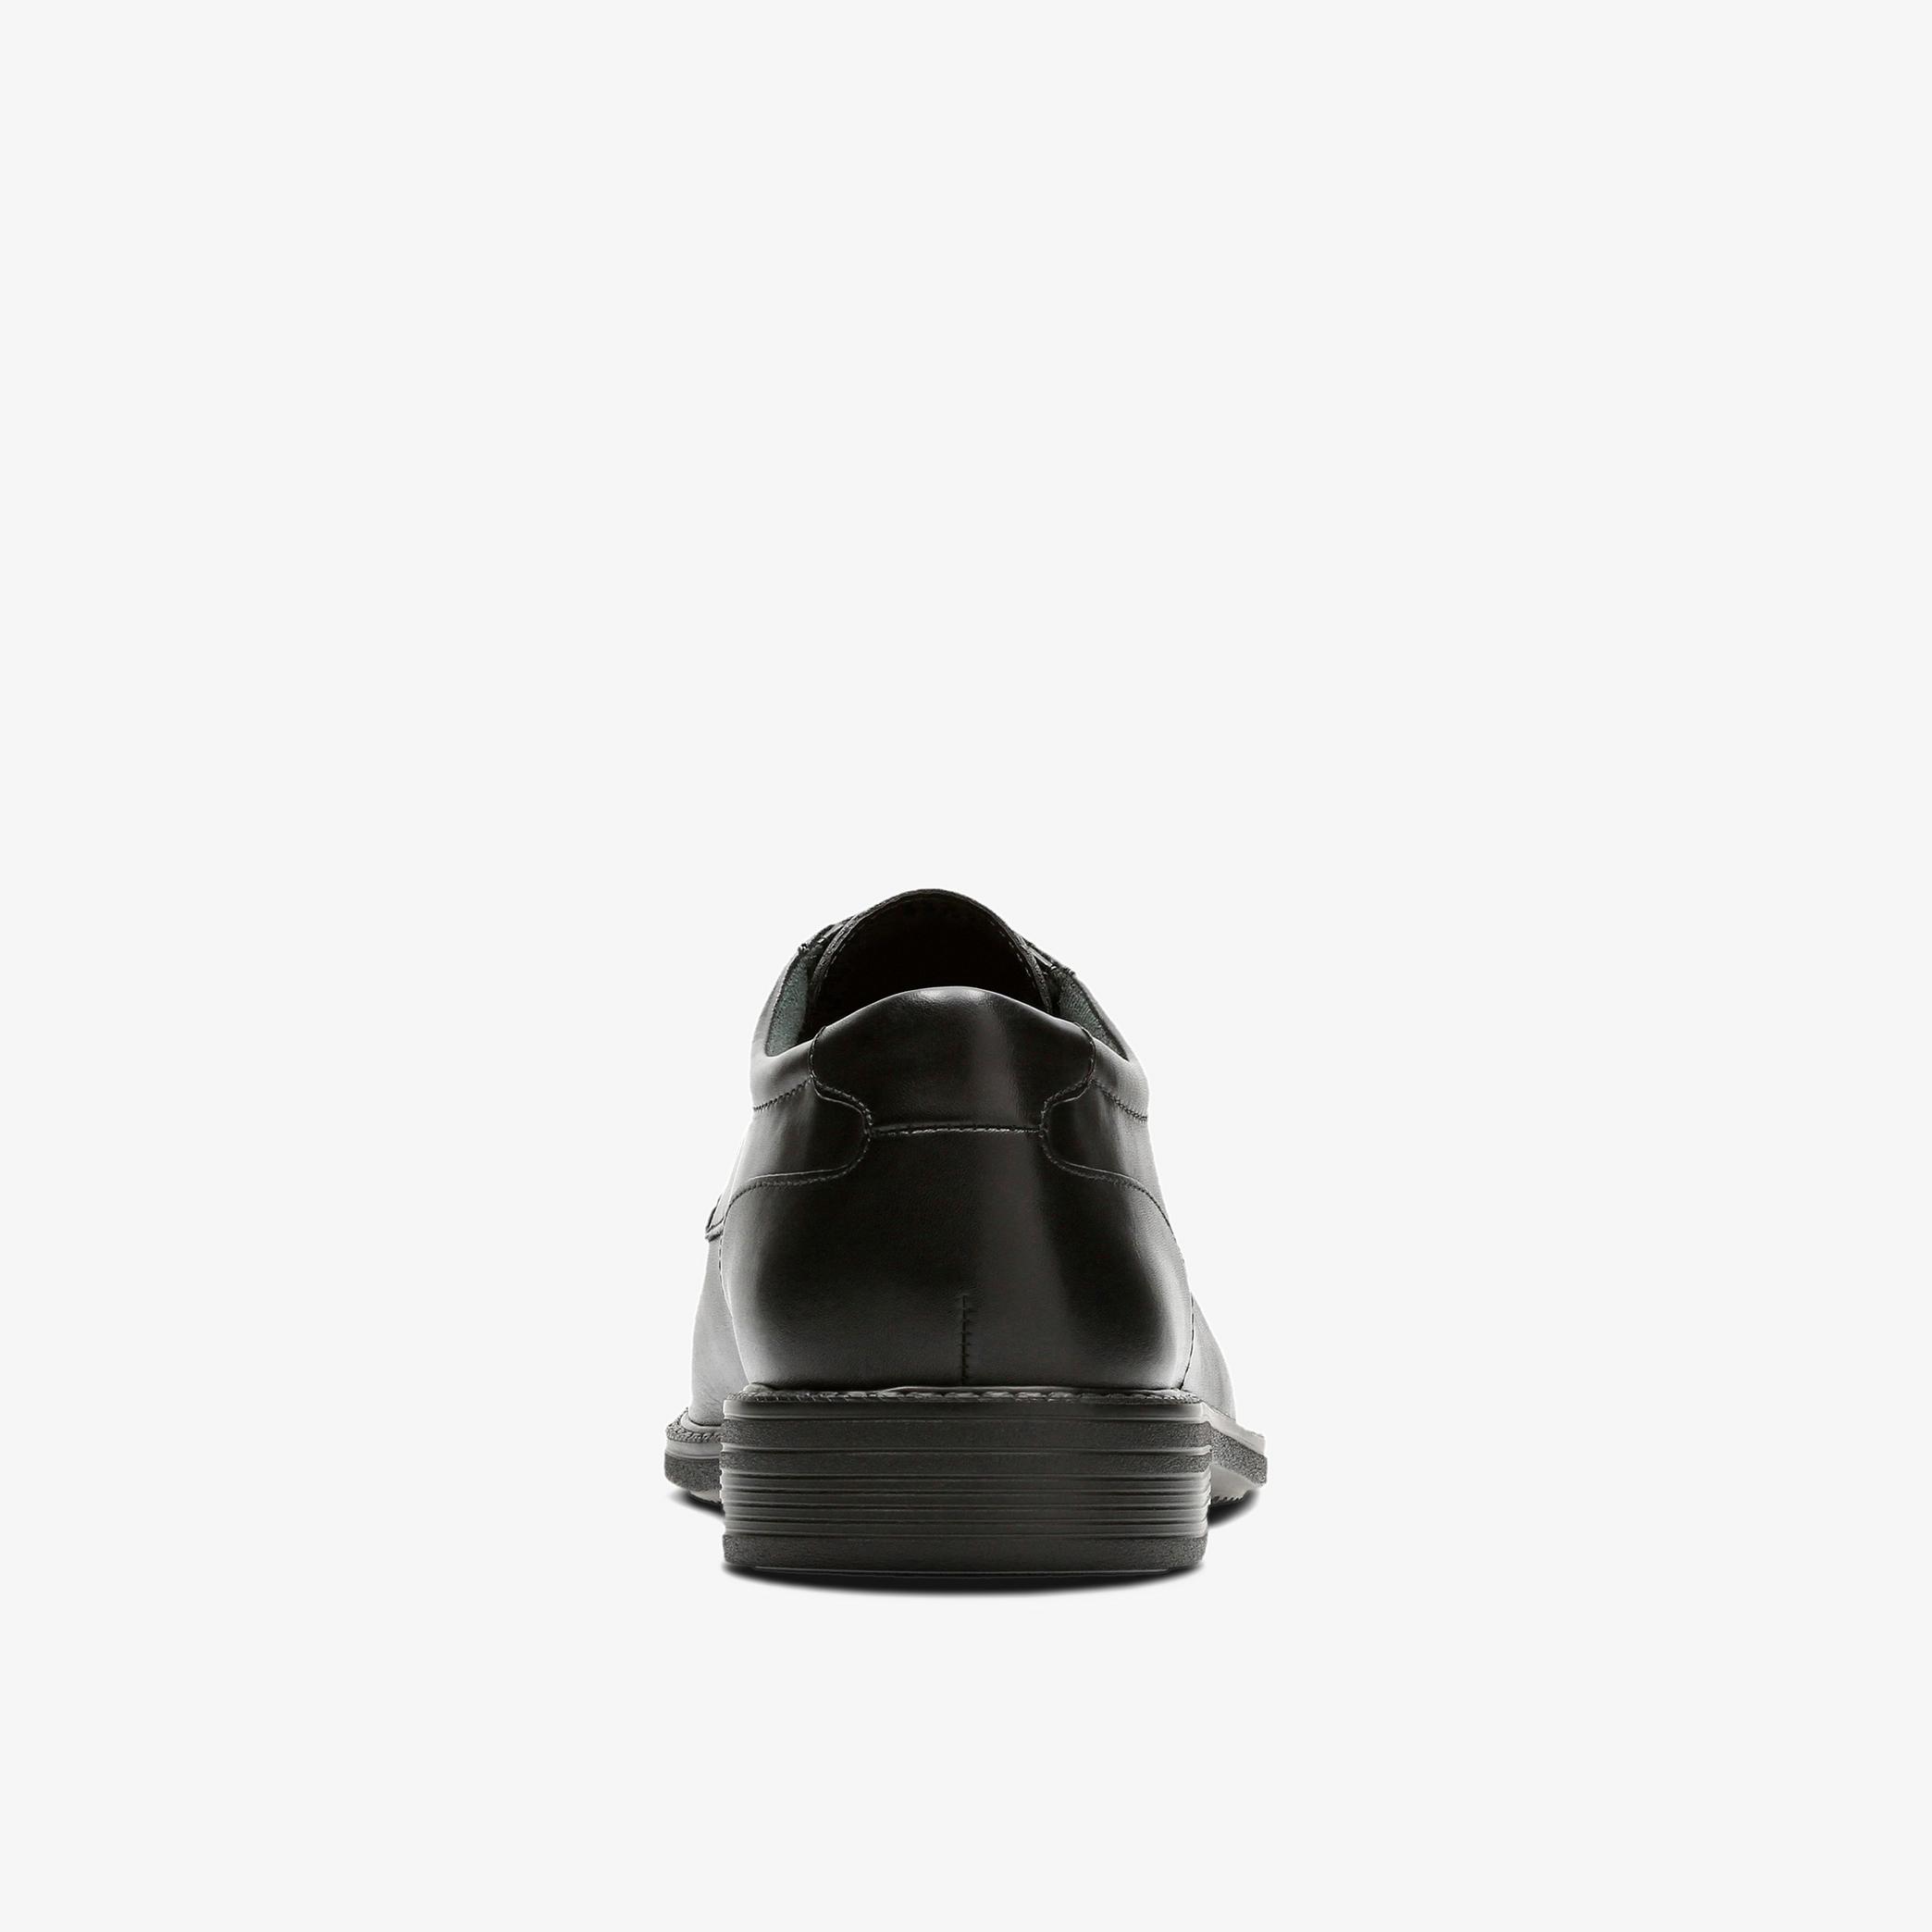 Wenham Cap II Black Leather Derby Shoe, view 5 of 6